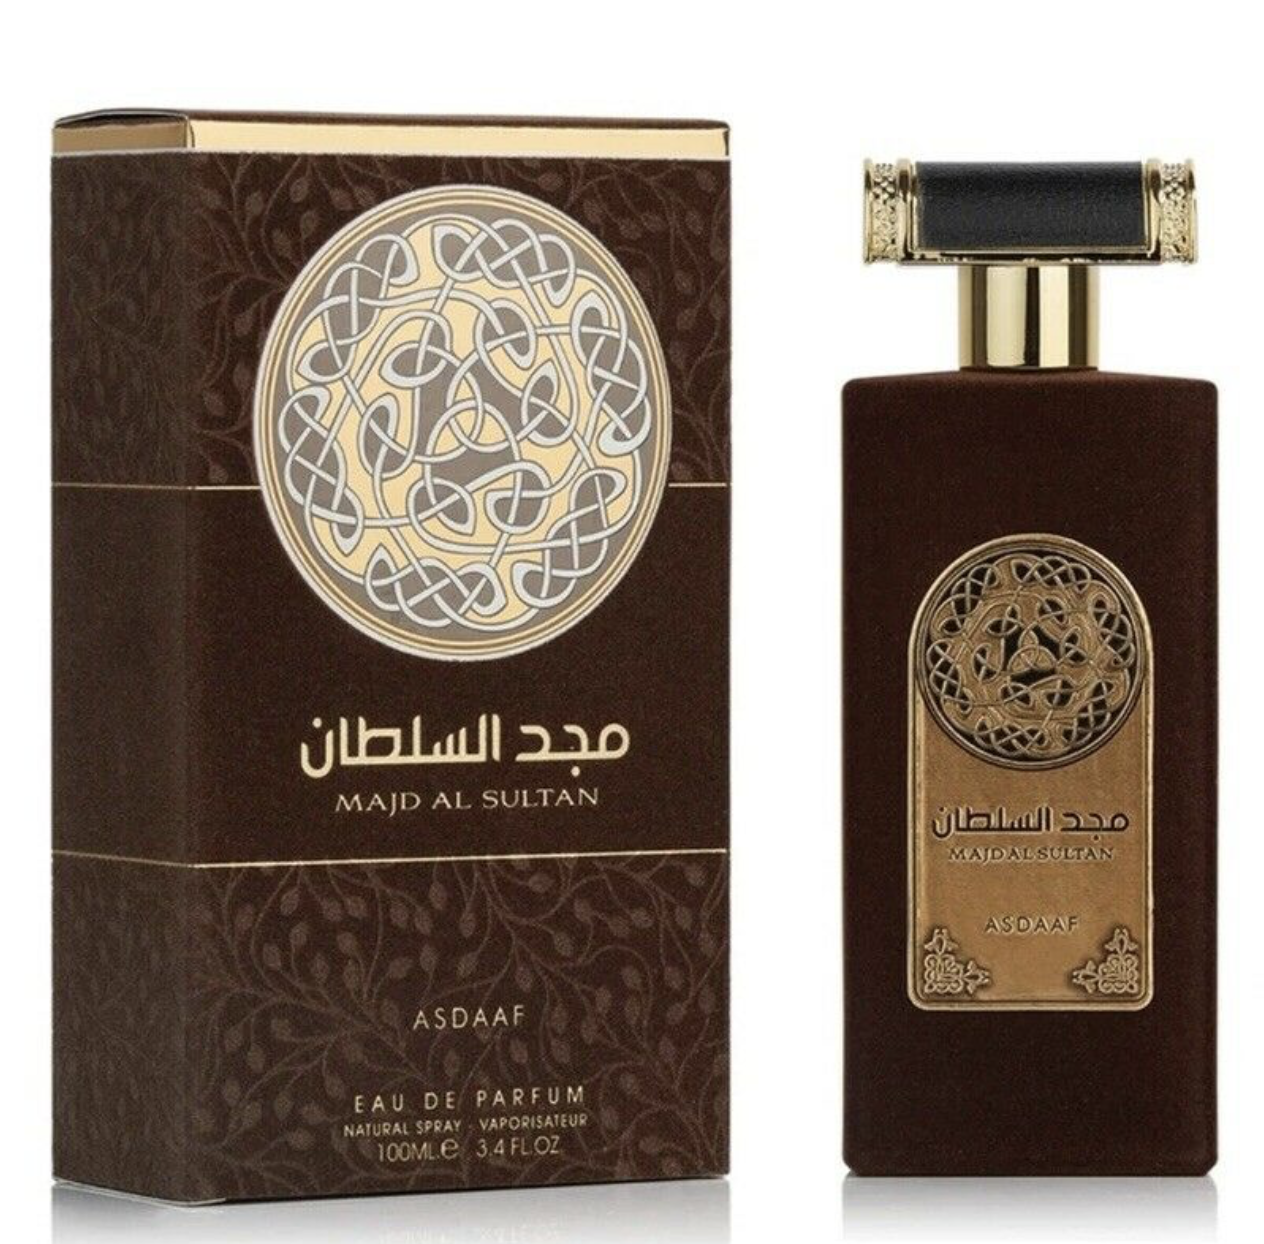 Majd Al Sultan EDP Perfume 100ML By Asdaaf Lattafa- USA SELLER + FREE SHIPPING